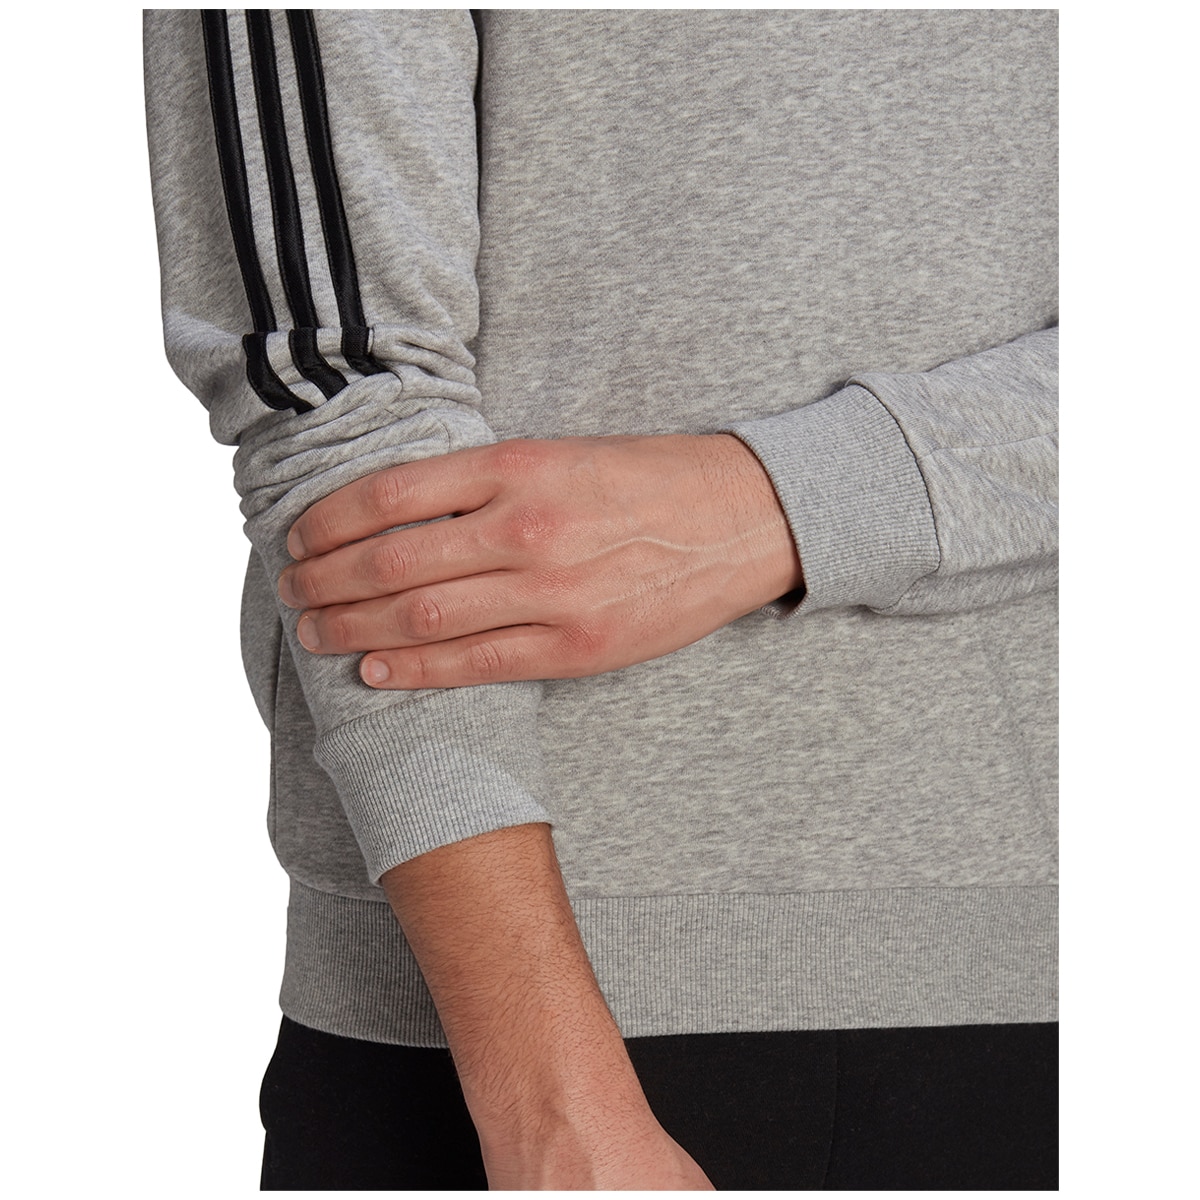 Adidas Fleece Sweater